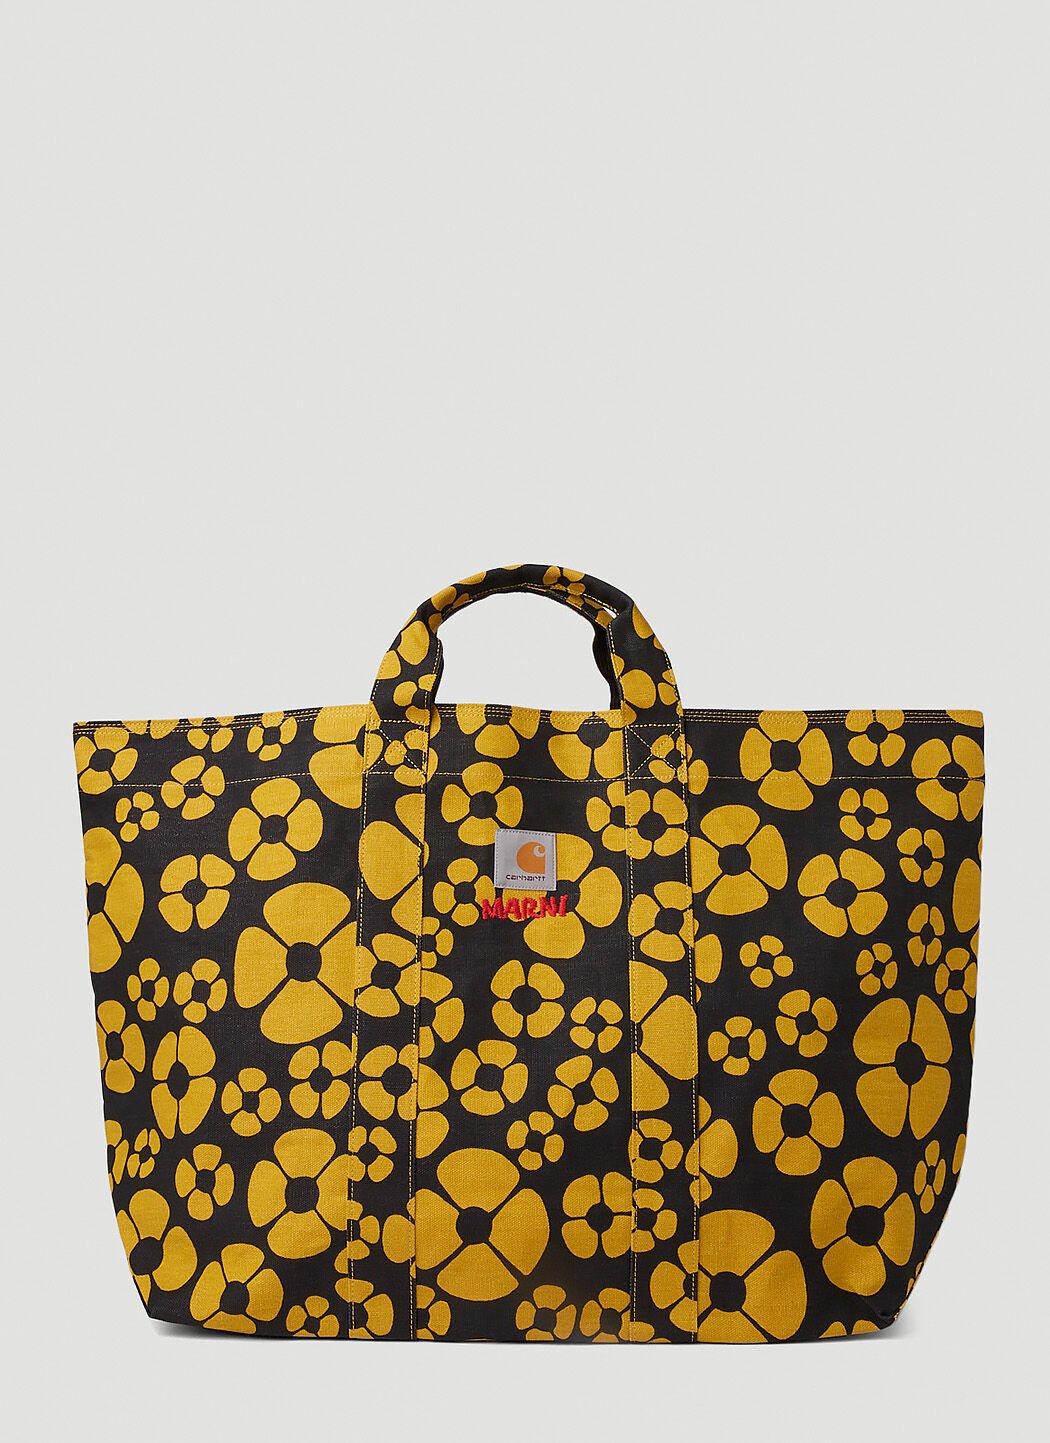 Marni x Carhartt Floral Print Tote Bag in Black | LN-CC®